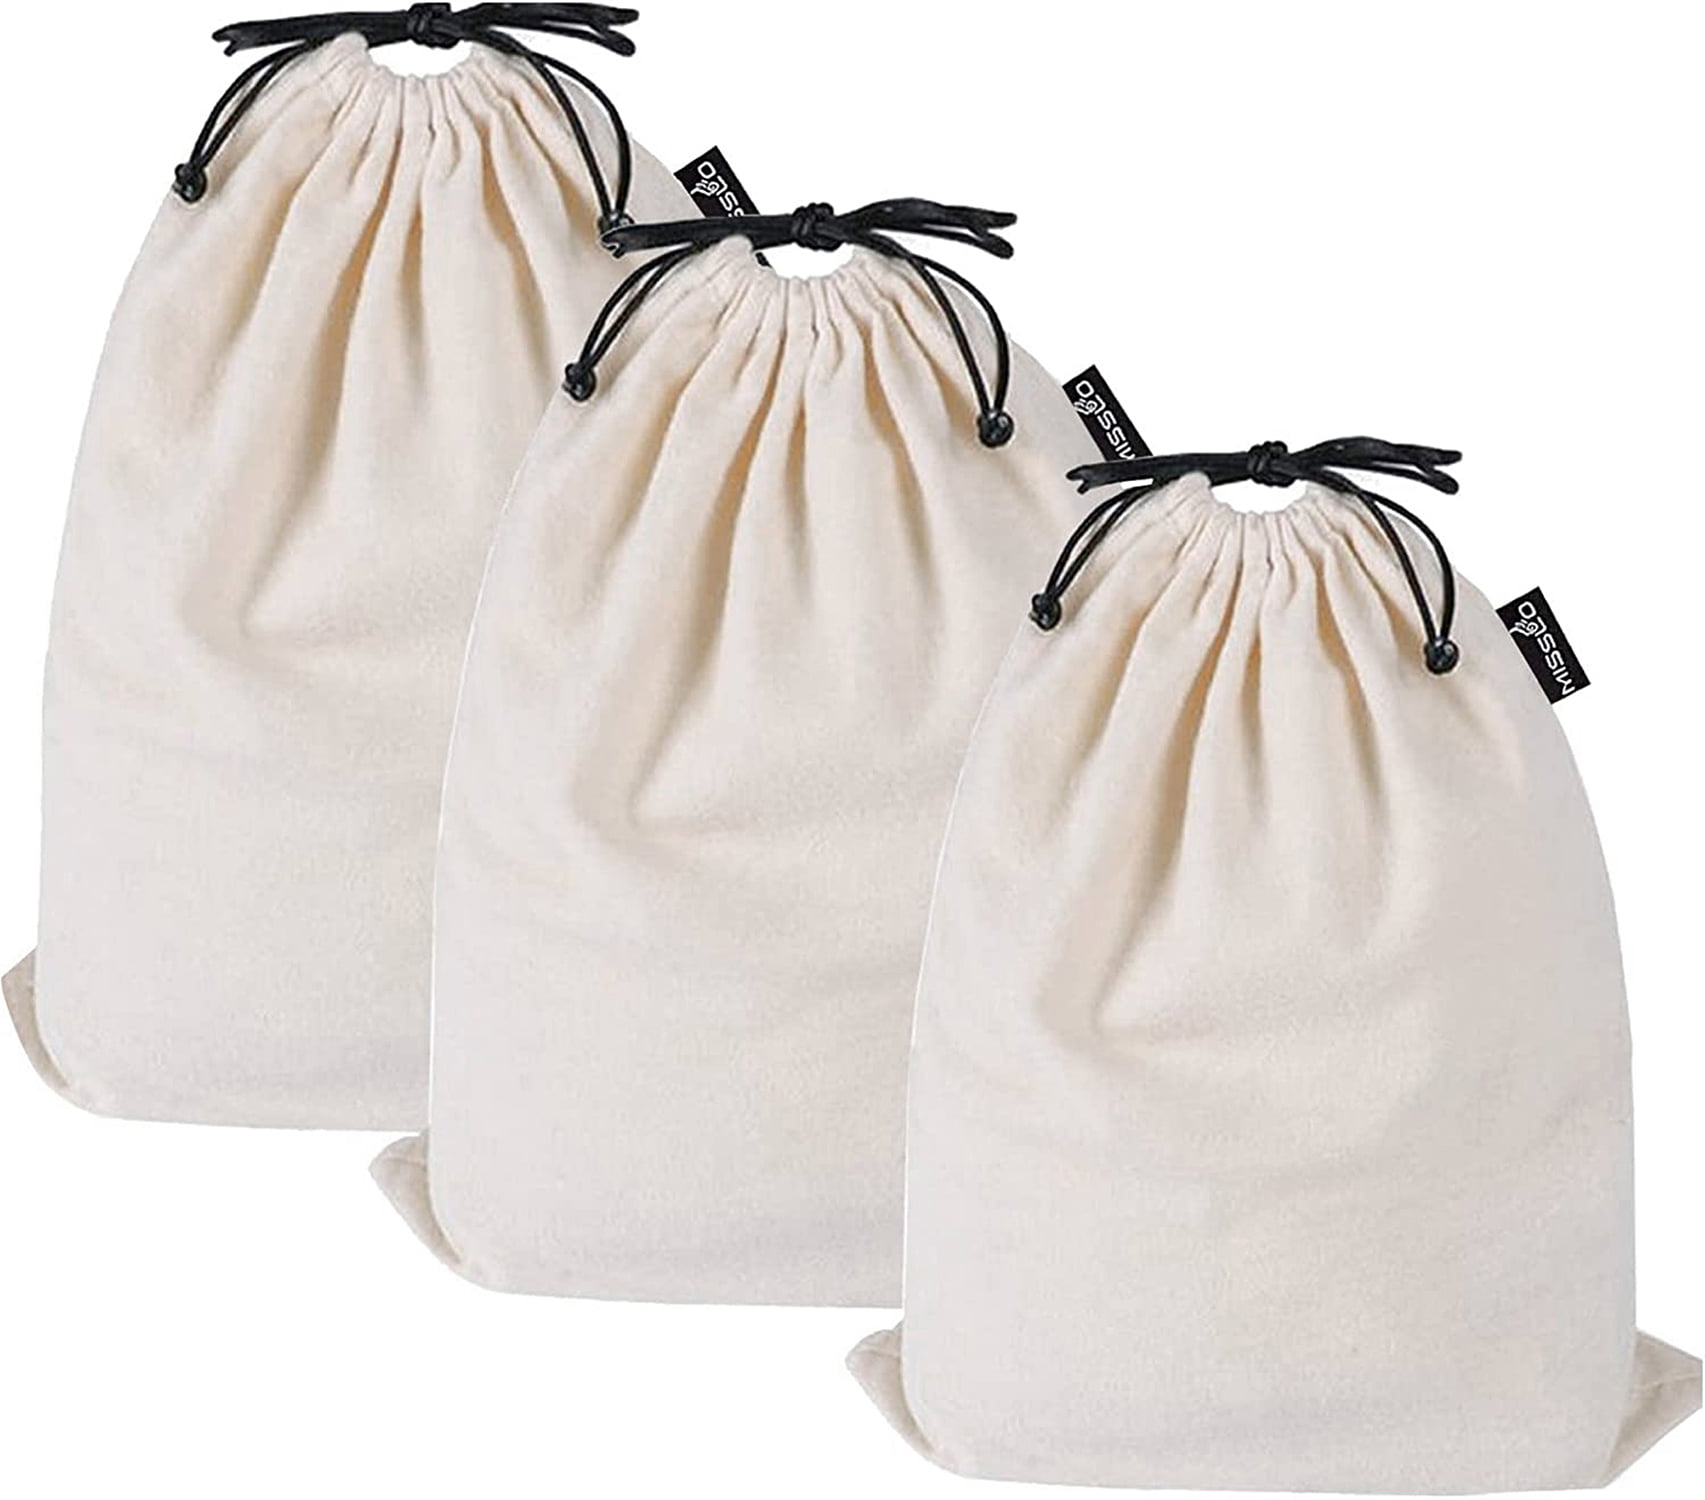 MOT Global Cotton Drawstring Dust Cover Pouch Bag for Handbags Purses Shoes Boots Storage White, 3 Medium 